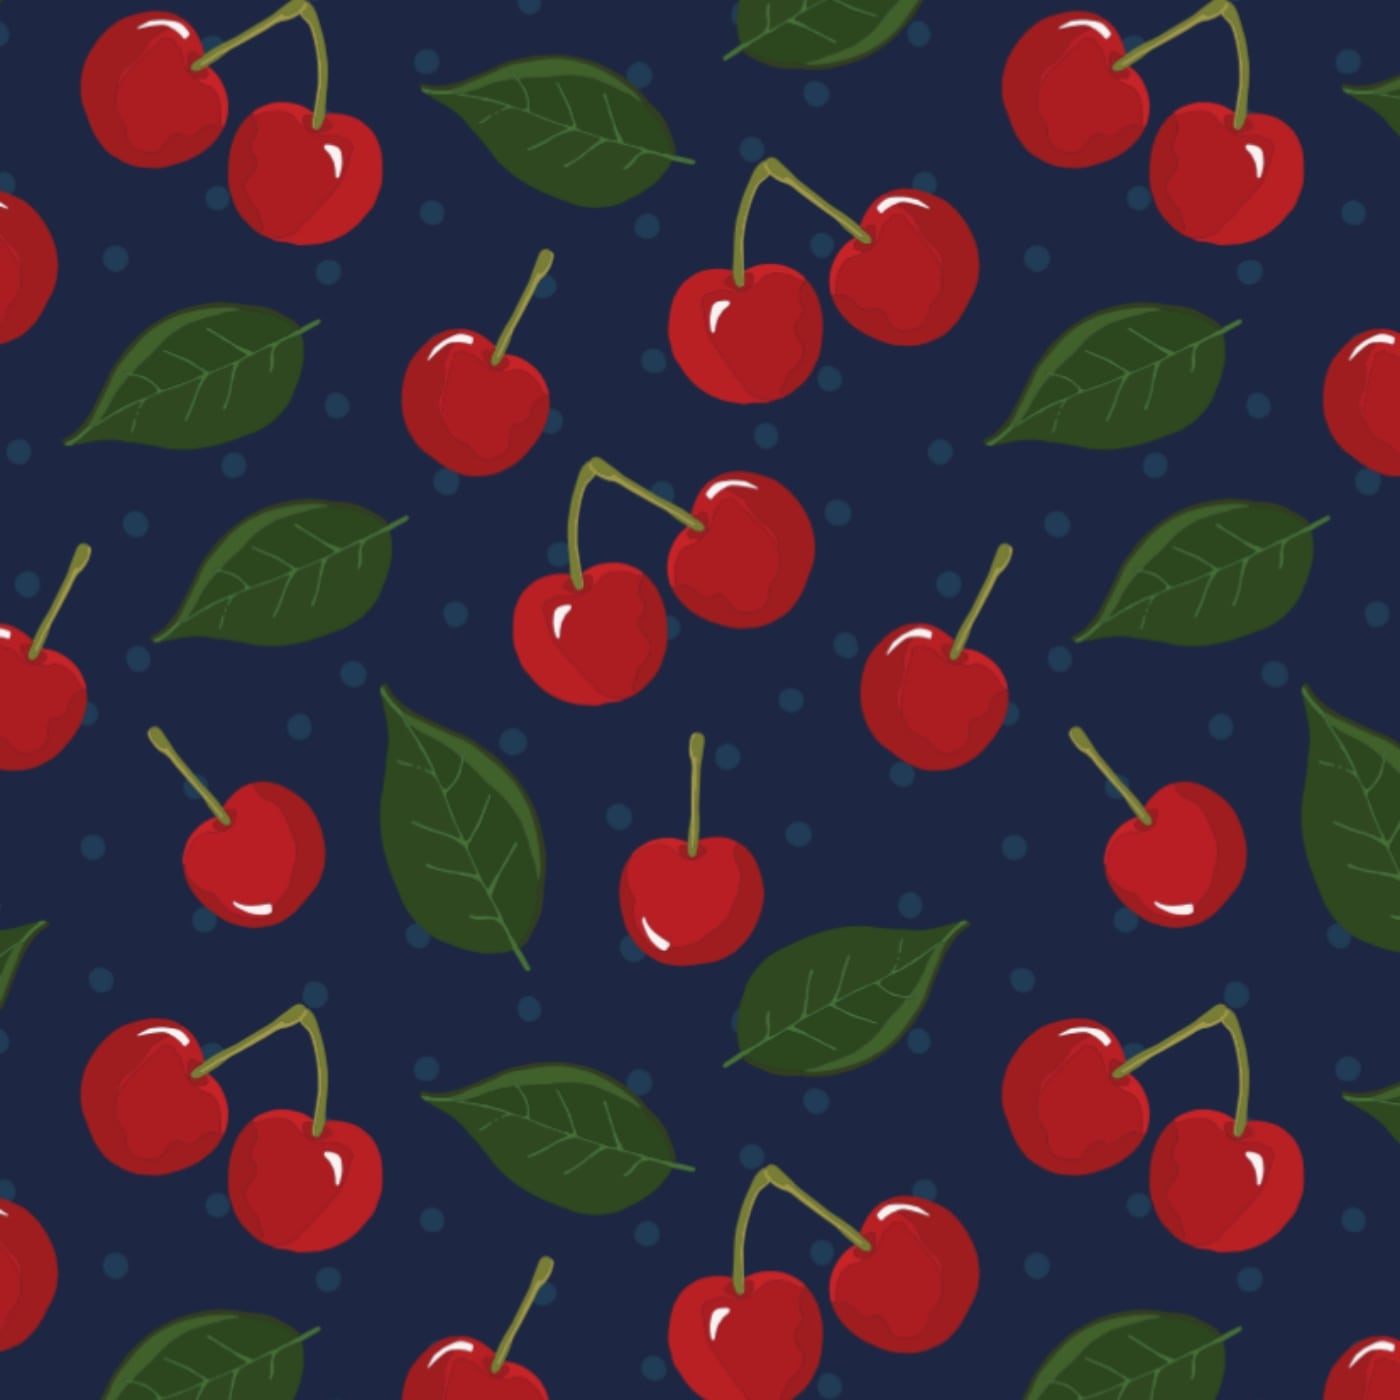 Cherry-Cherries-Cherry-Print-Rockabilly-Kitsch-Vintage-Inspired-RainbowsAndFairies.com.au-CHERR_ORG-01